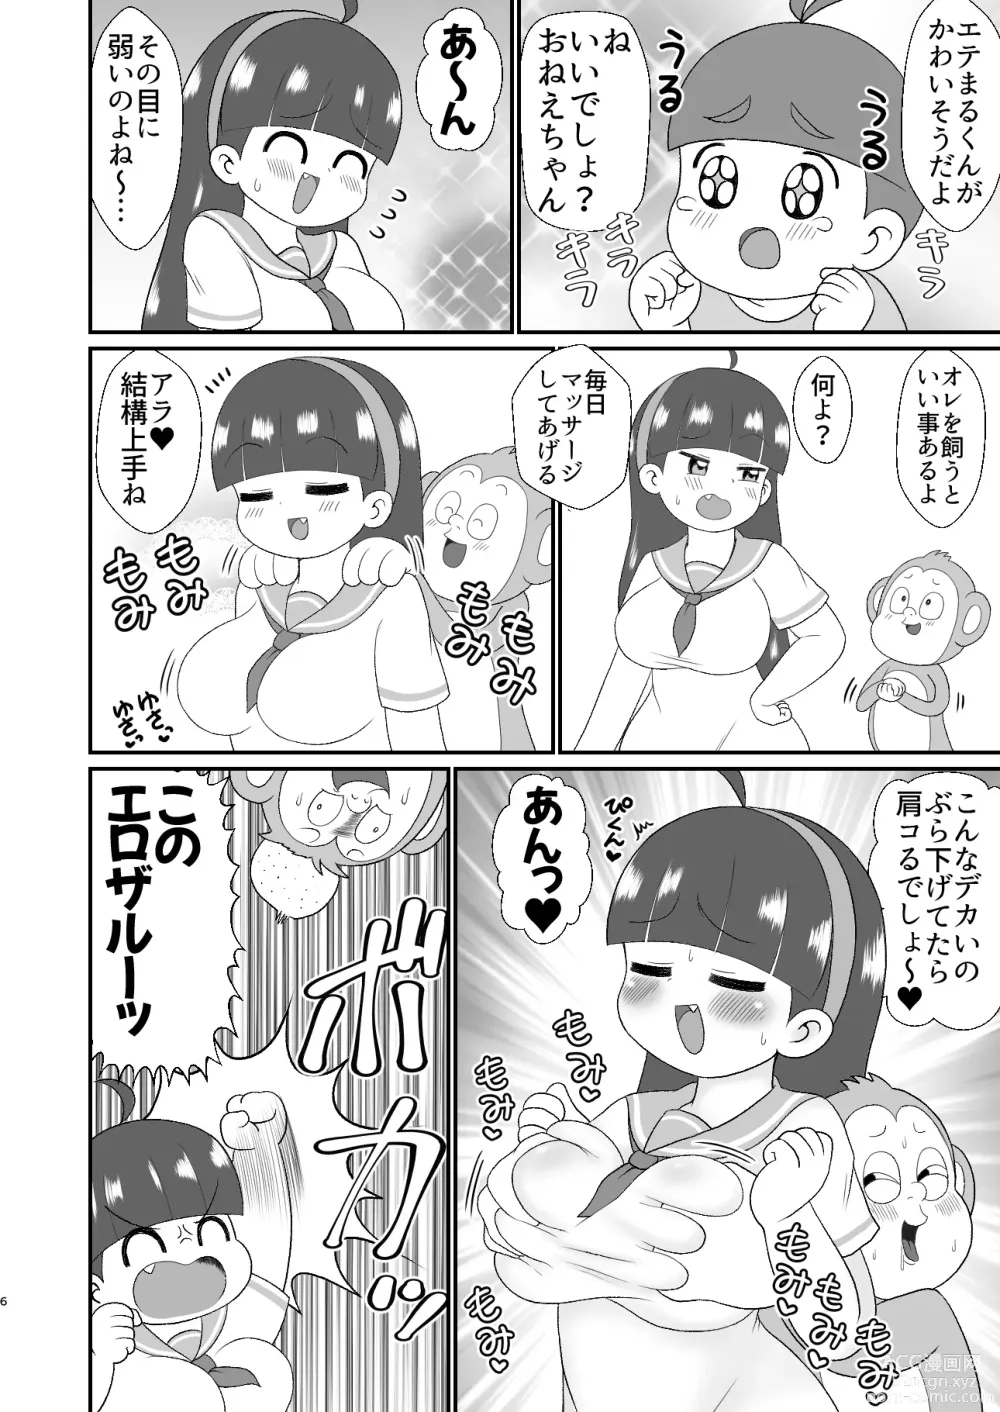 Page 5 of doujinshi Etemaru-kun